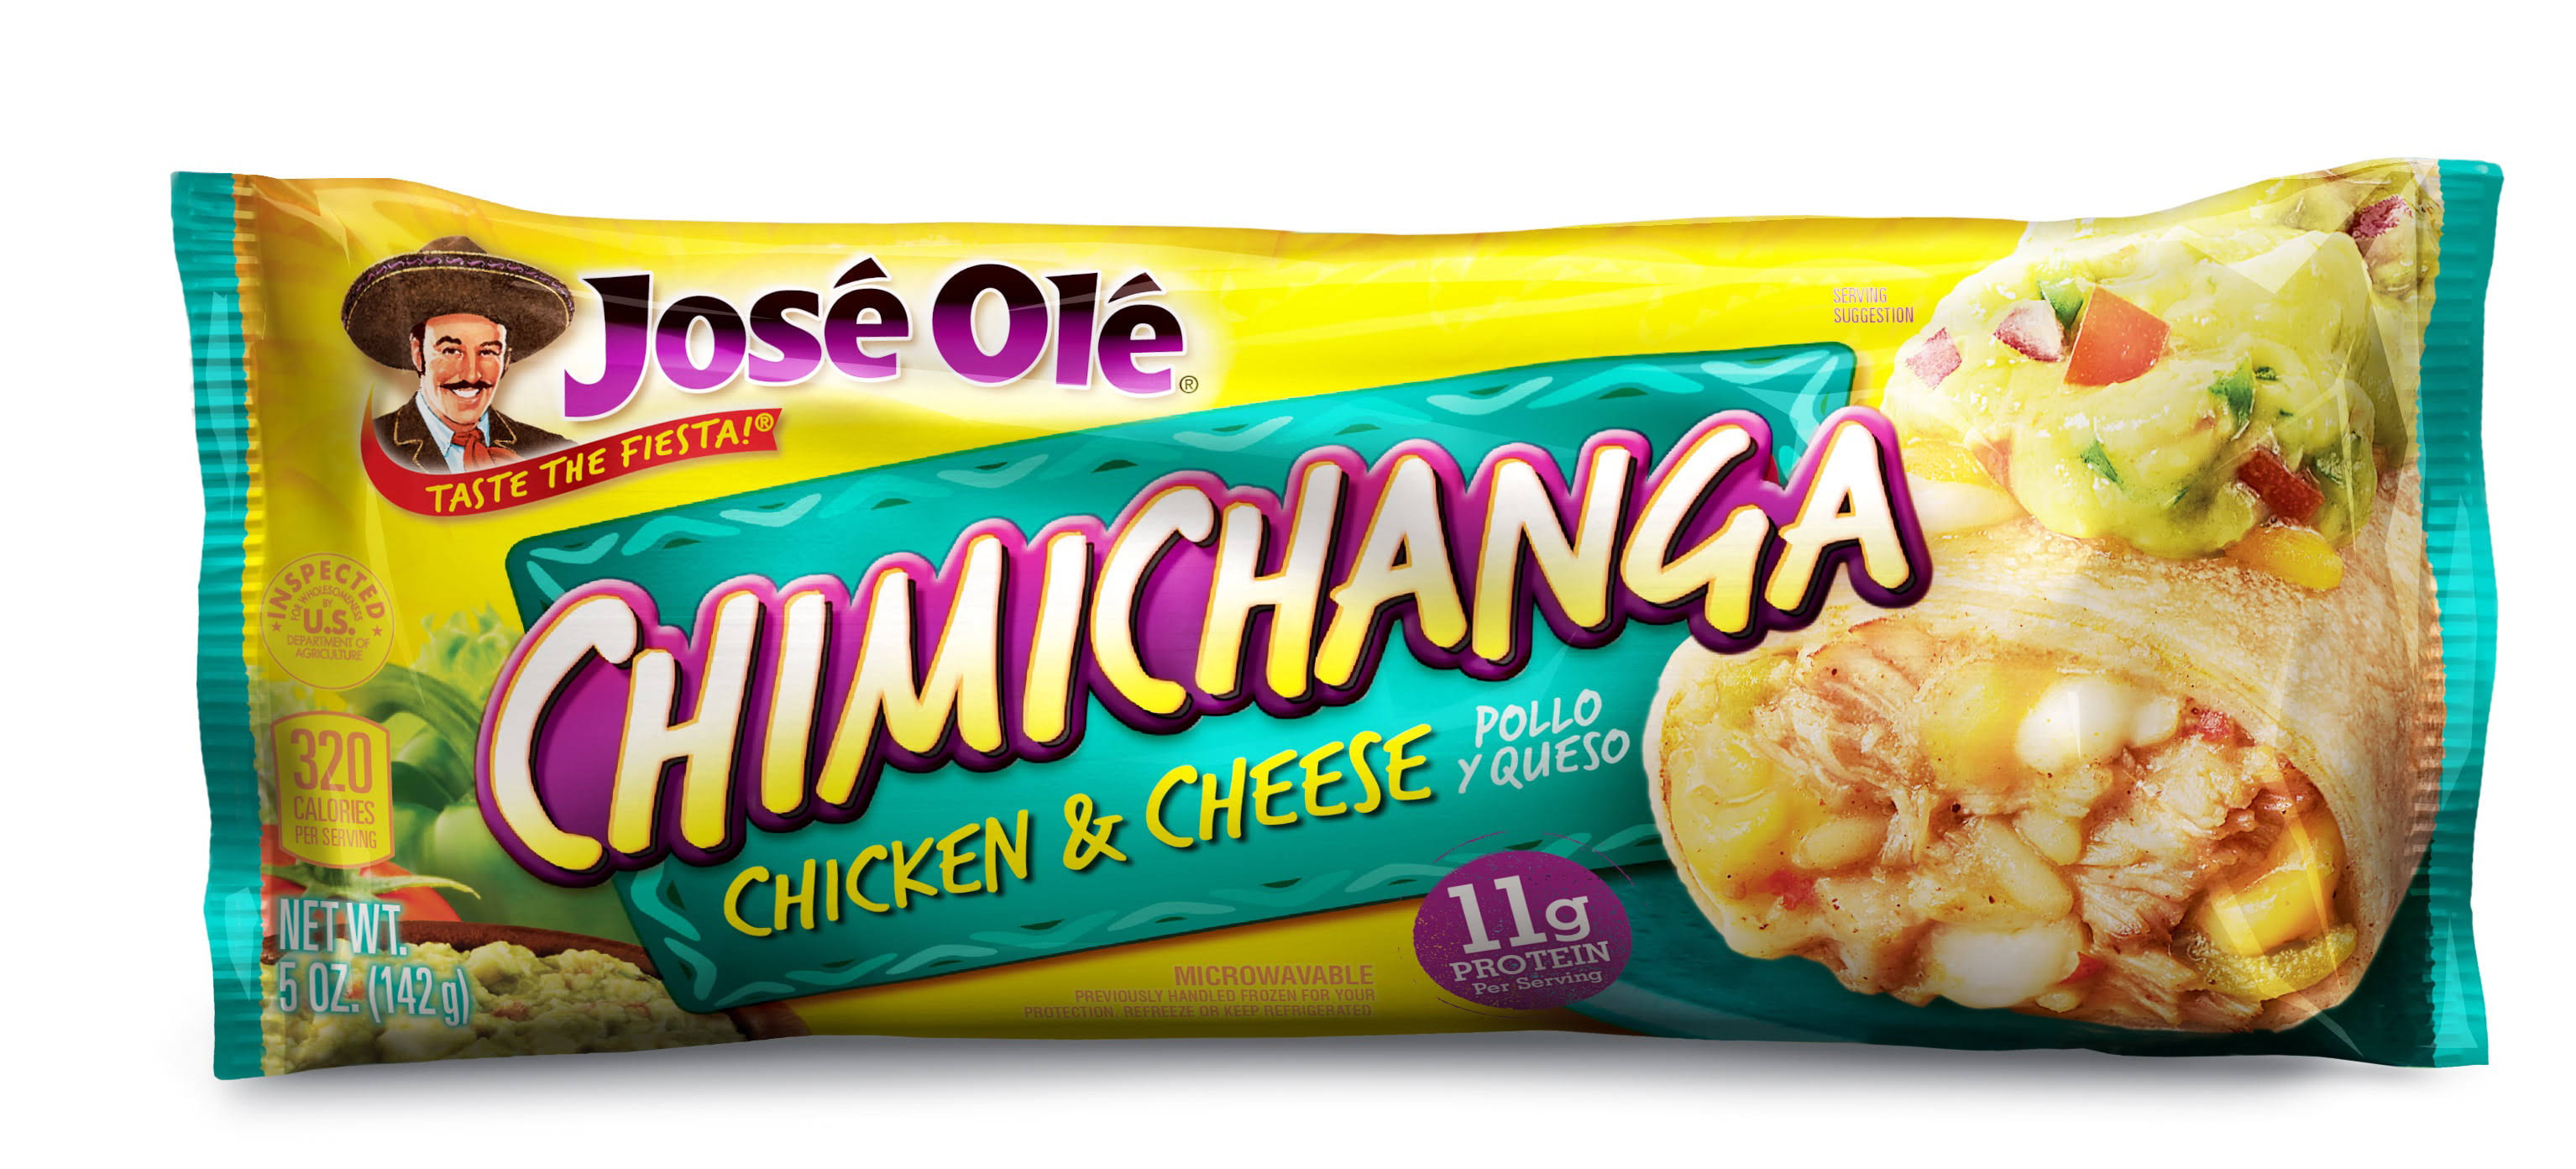 Jose Ole Chimichanga - Chicken and Cheese, 5oz